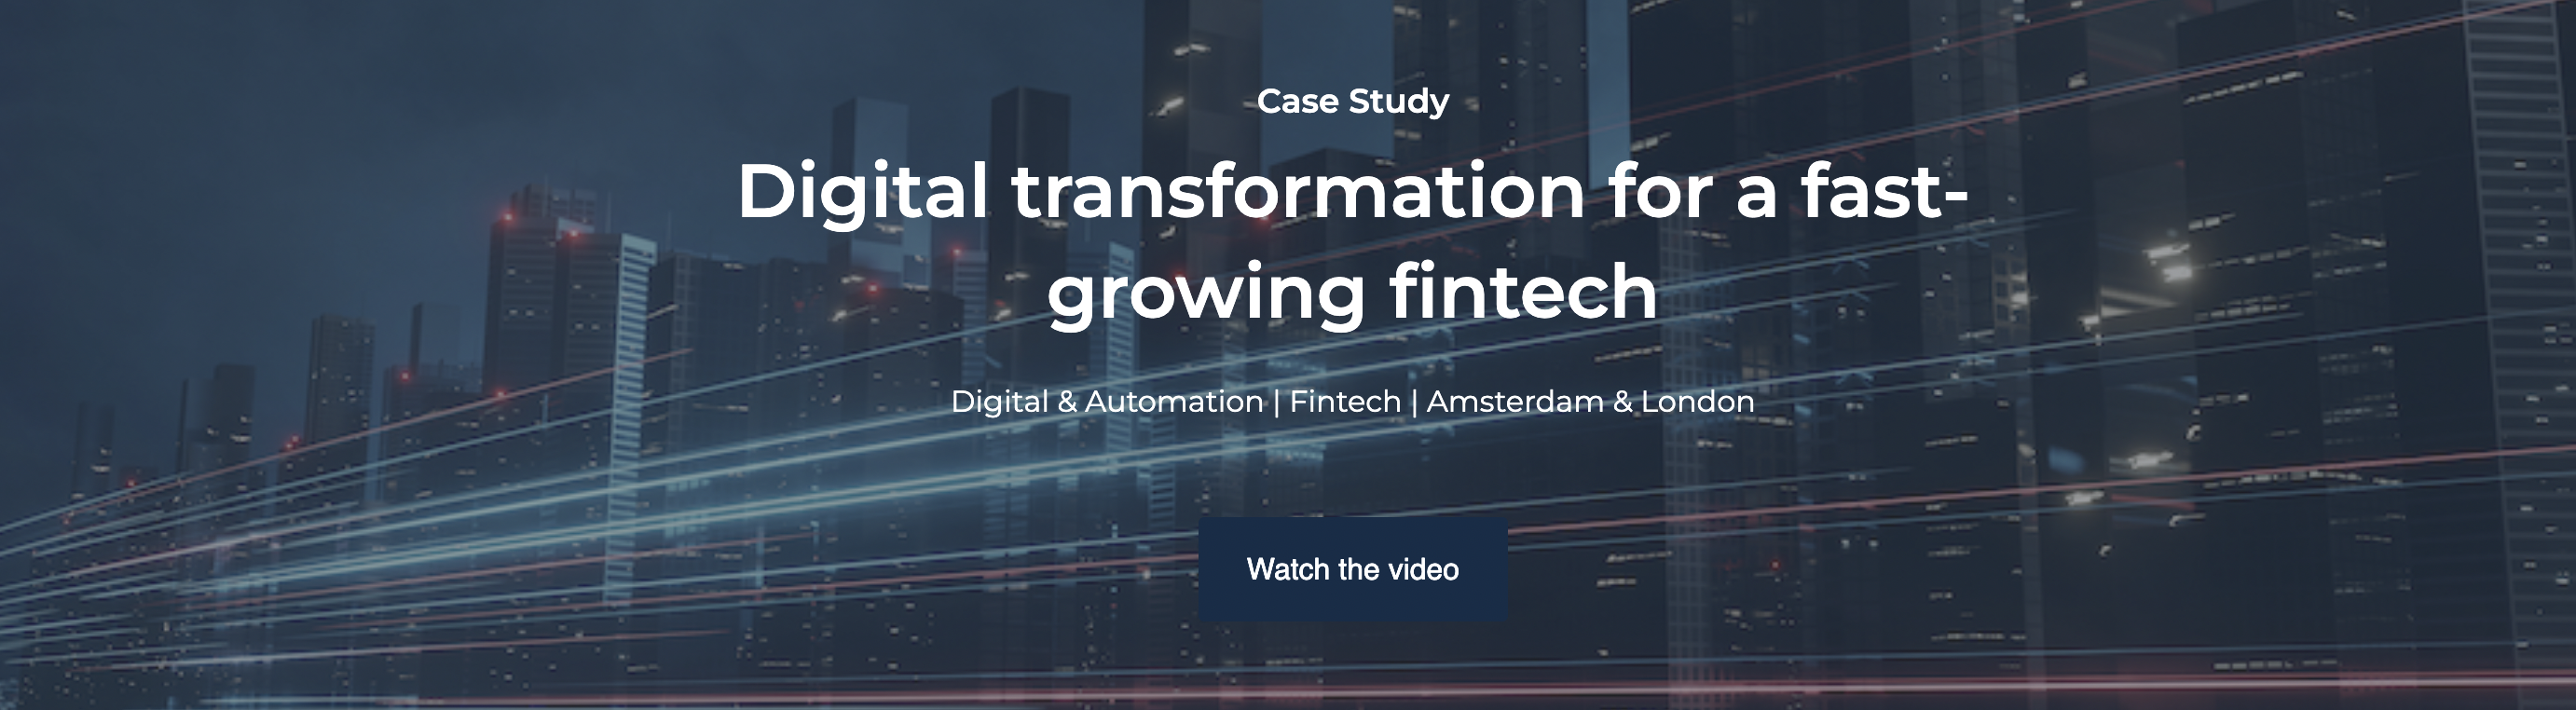 Digital Case Study: Digital transformation for a fast-growing fintech